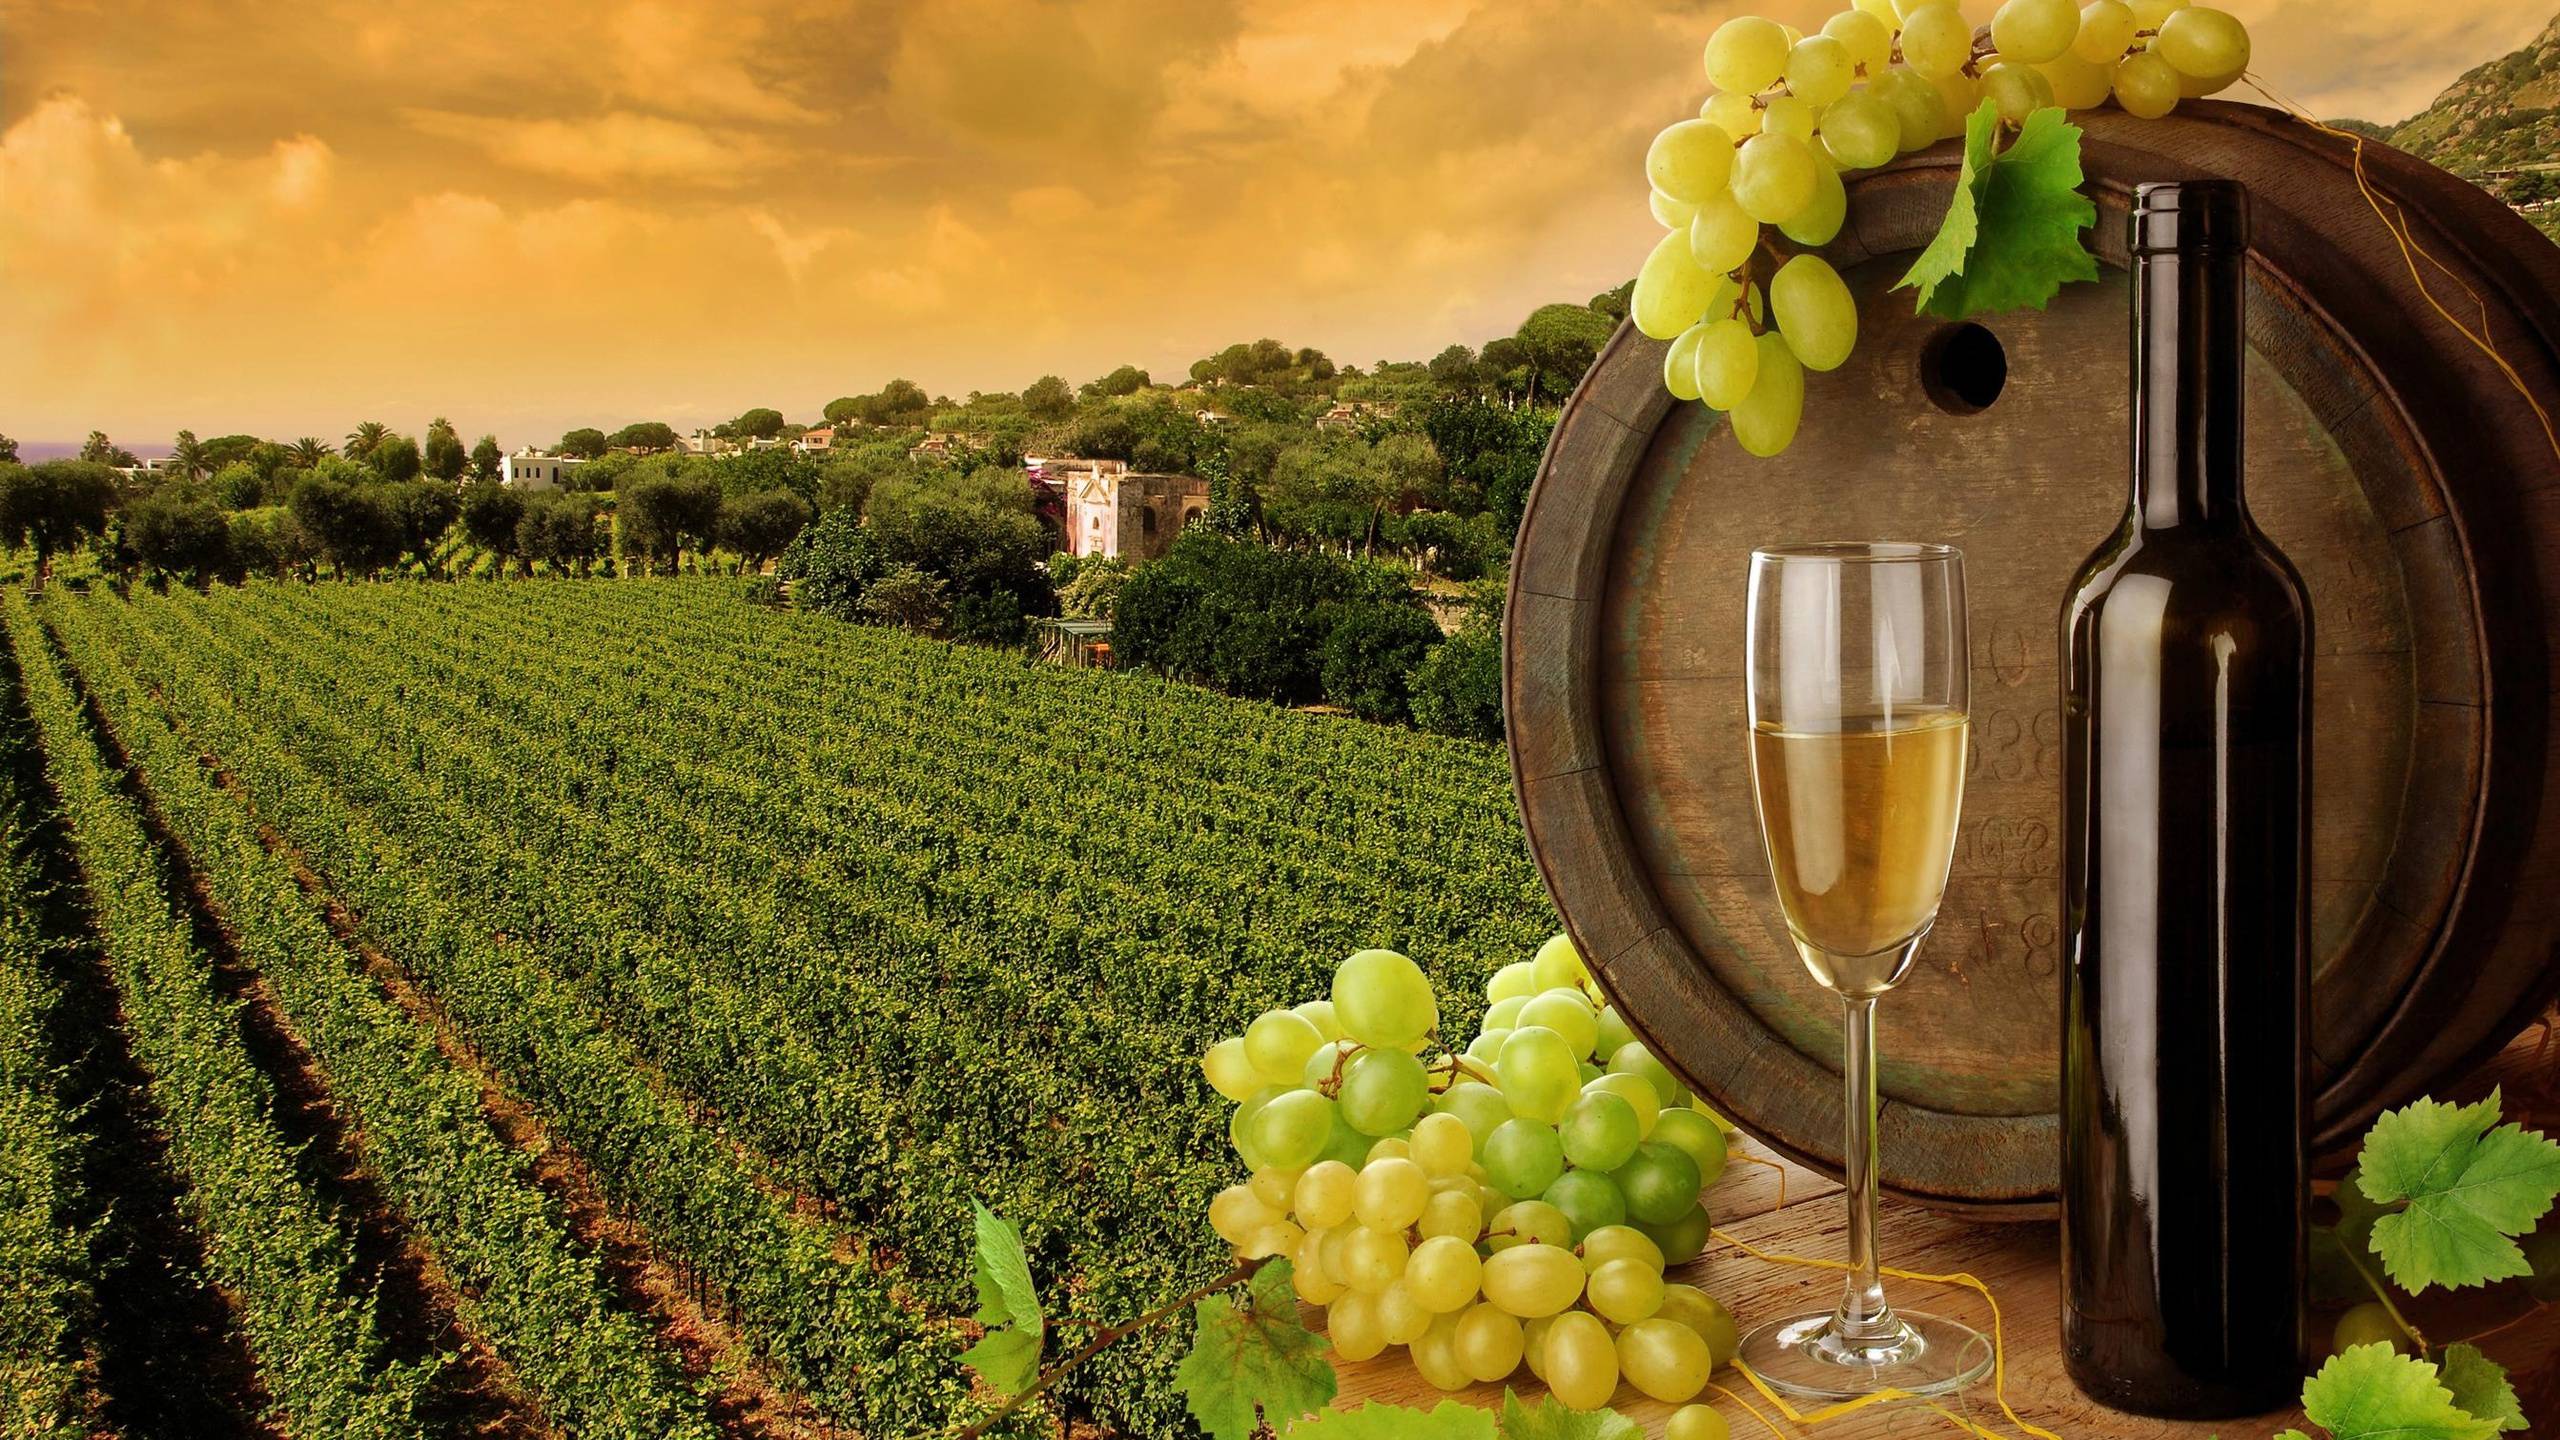 Vineyard Toscana 2560 x 1440 Locality Photography MIRIADNA 2560x1440